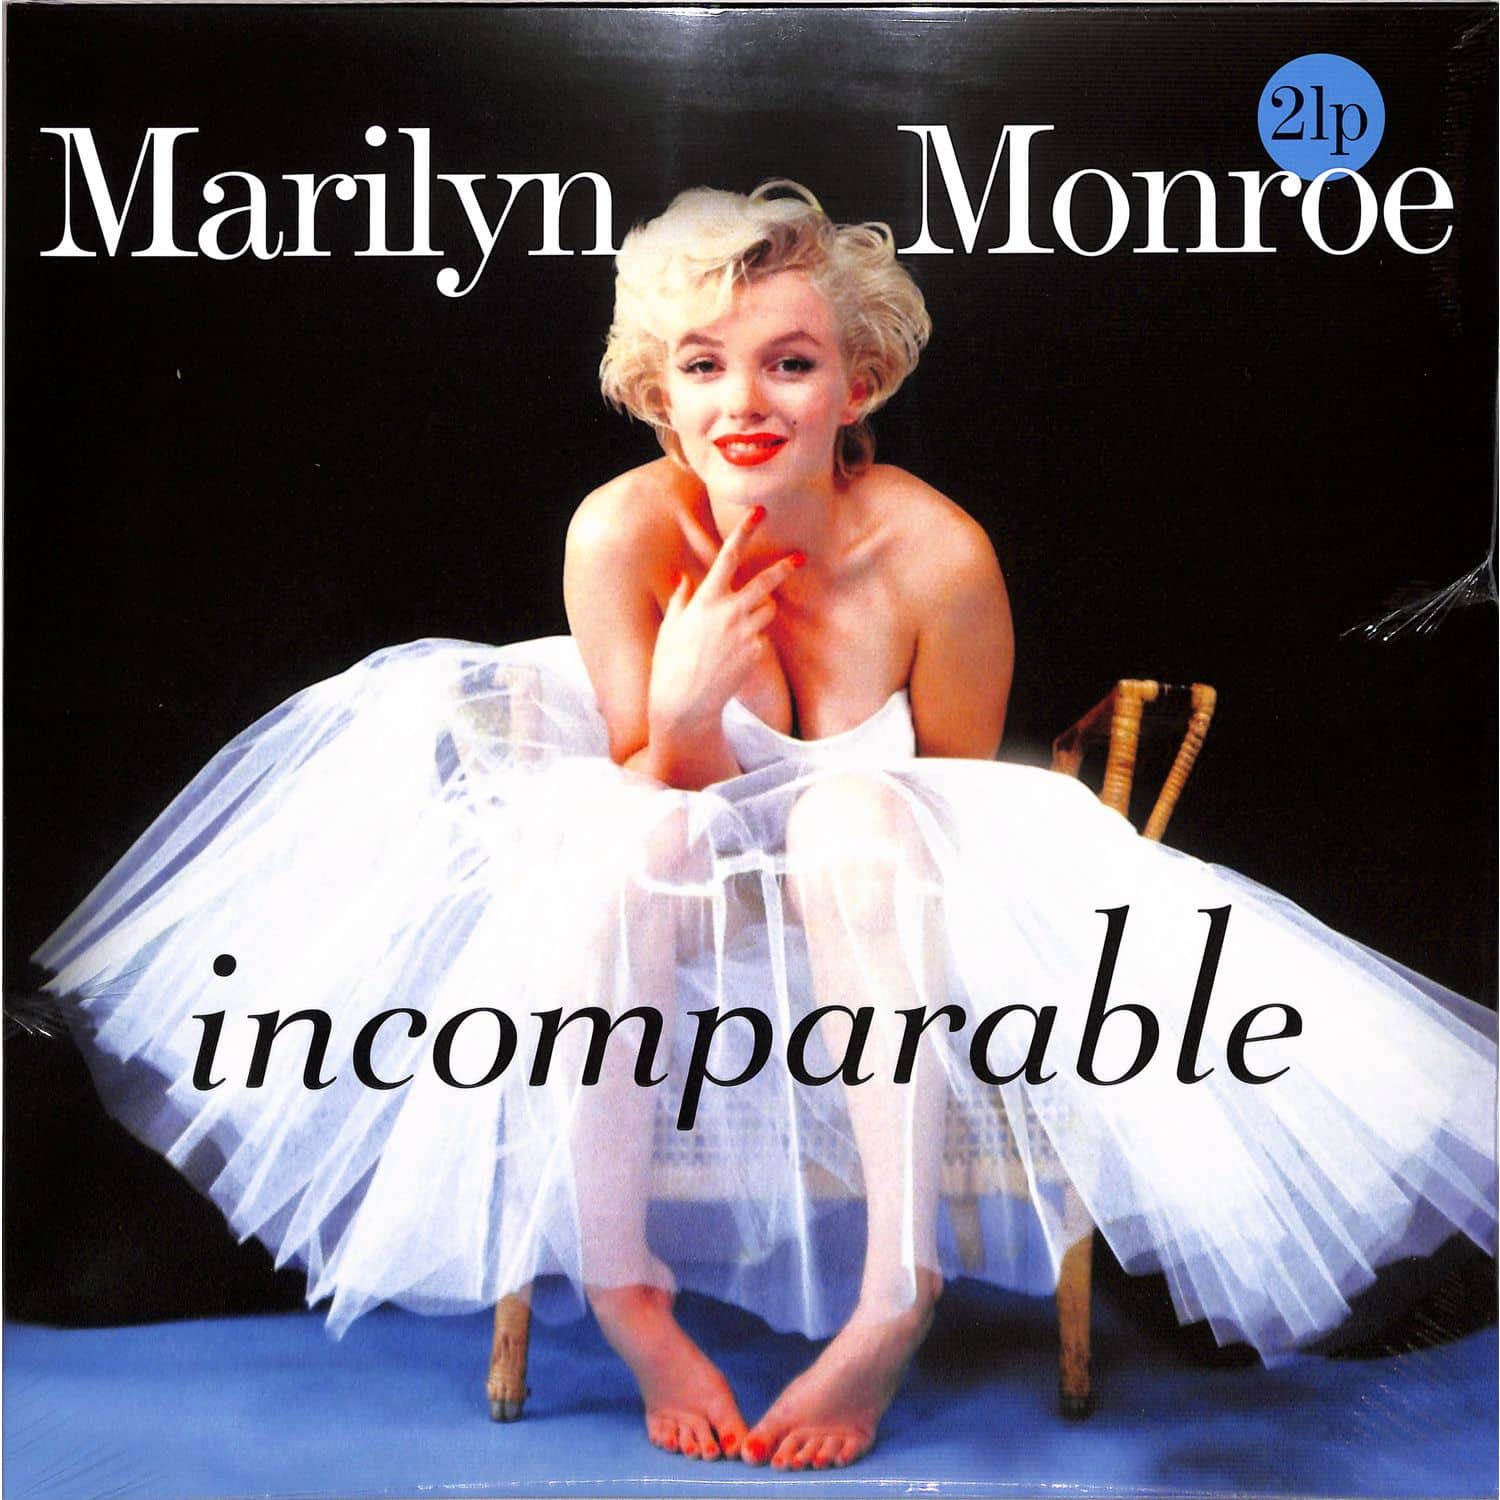 Marilyn Monroe - INCOMPARABLE 